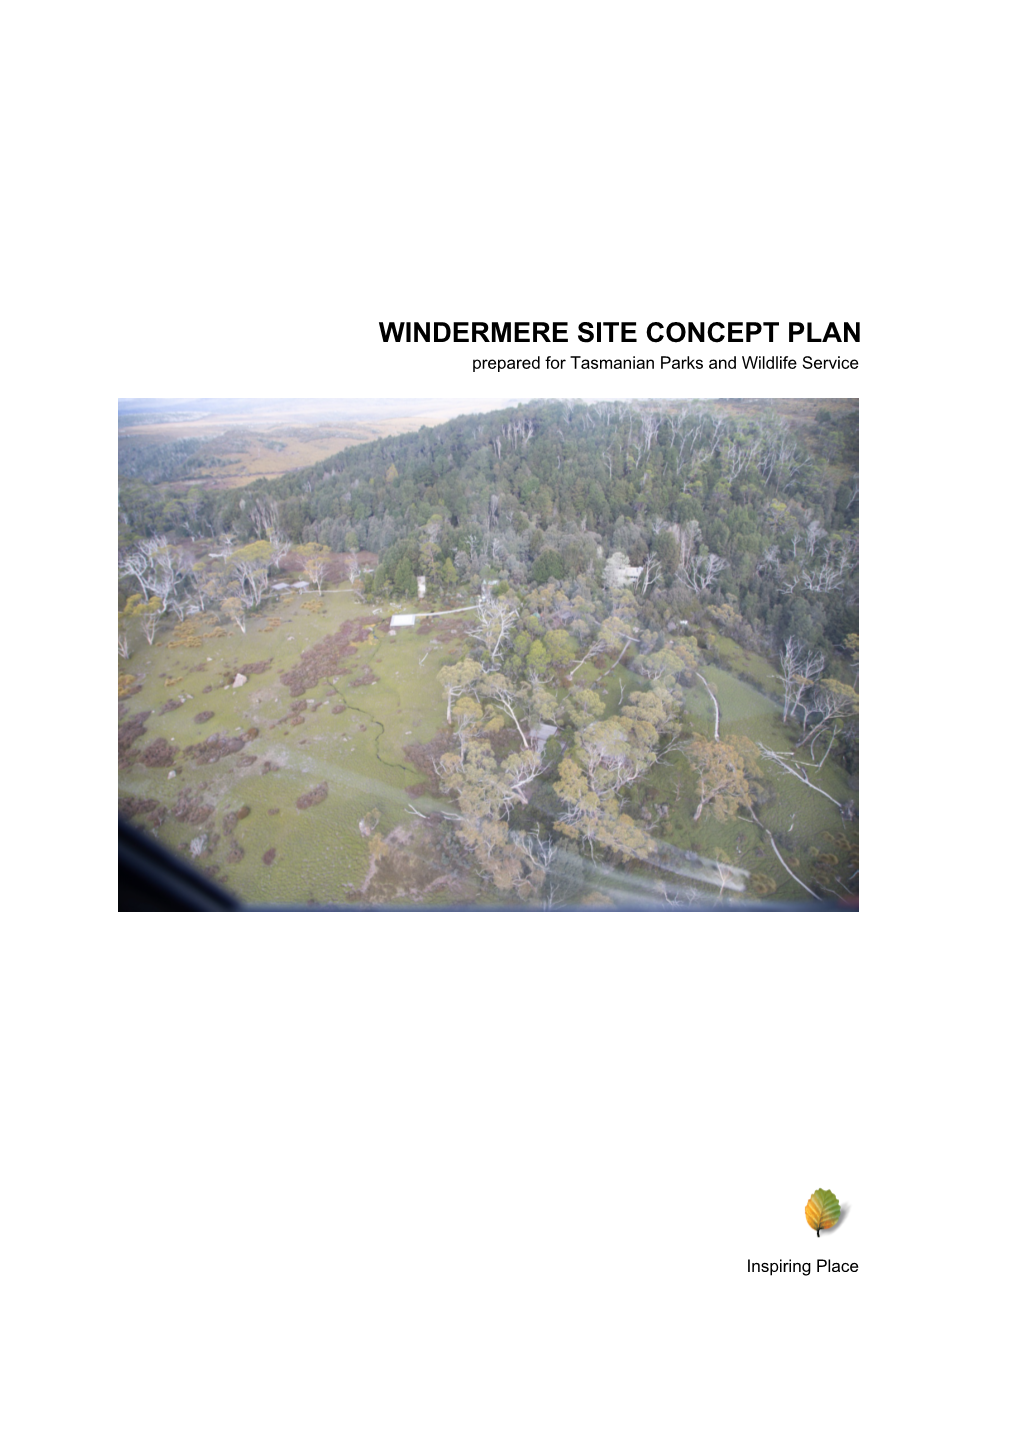 Windermere Site Concept Plan 2019